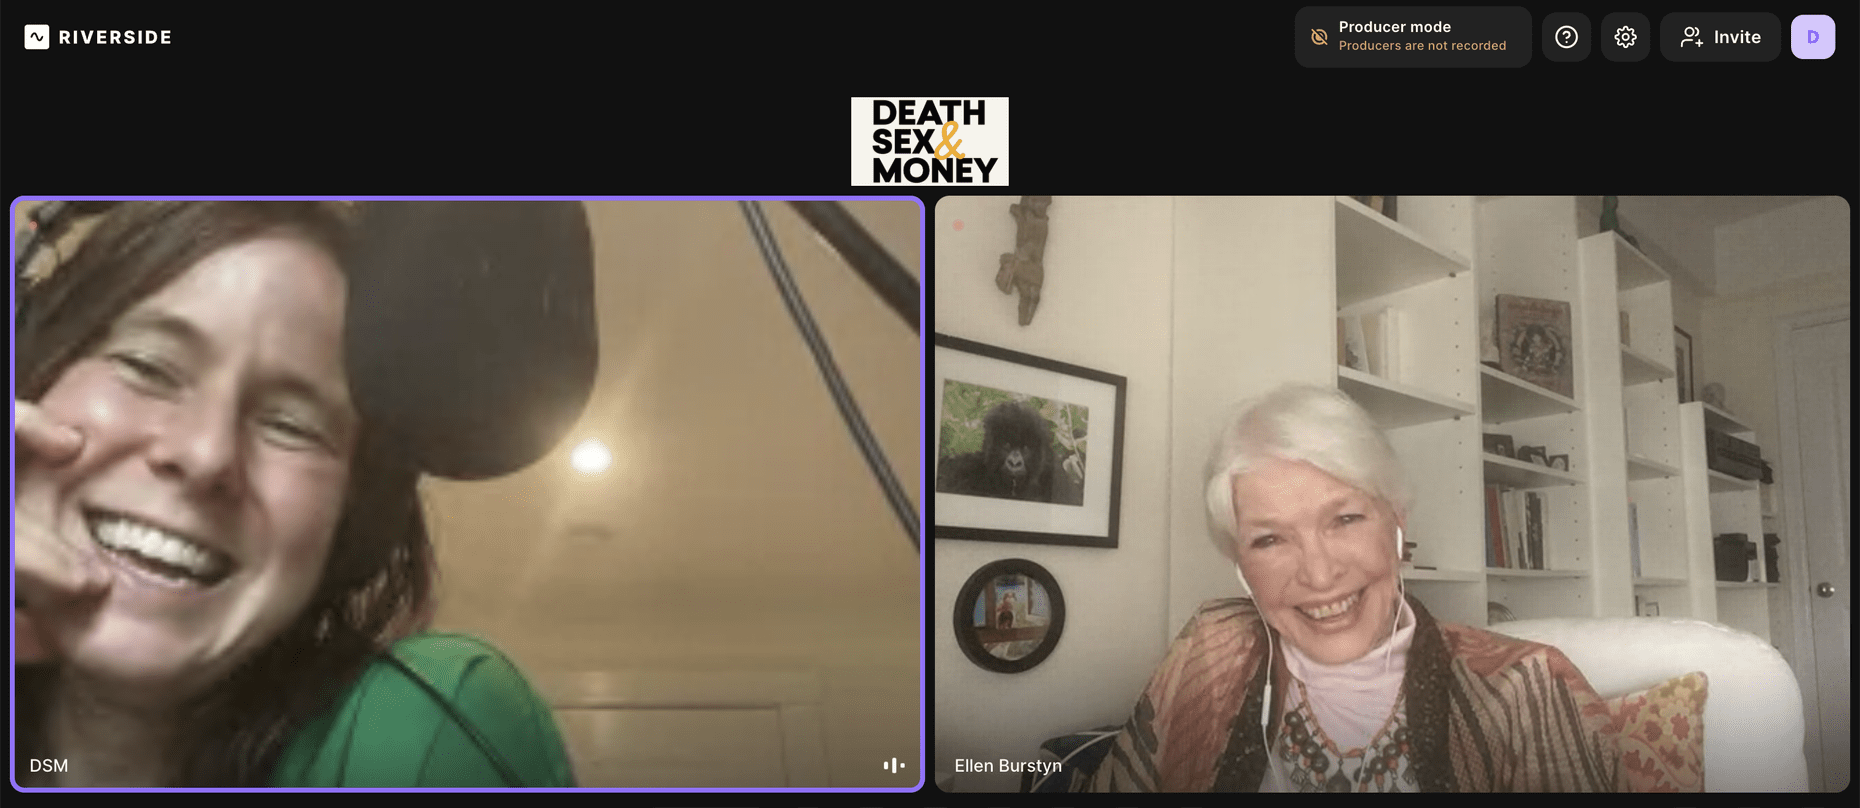 Ellen Burstyn at 90 Today Death, Sex and Money WNYC Studios pic